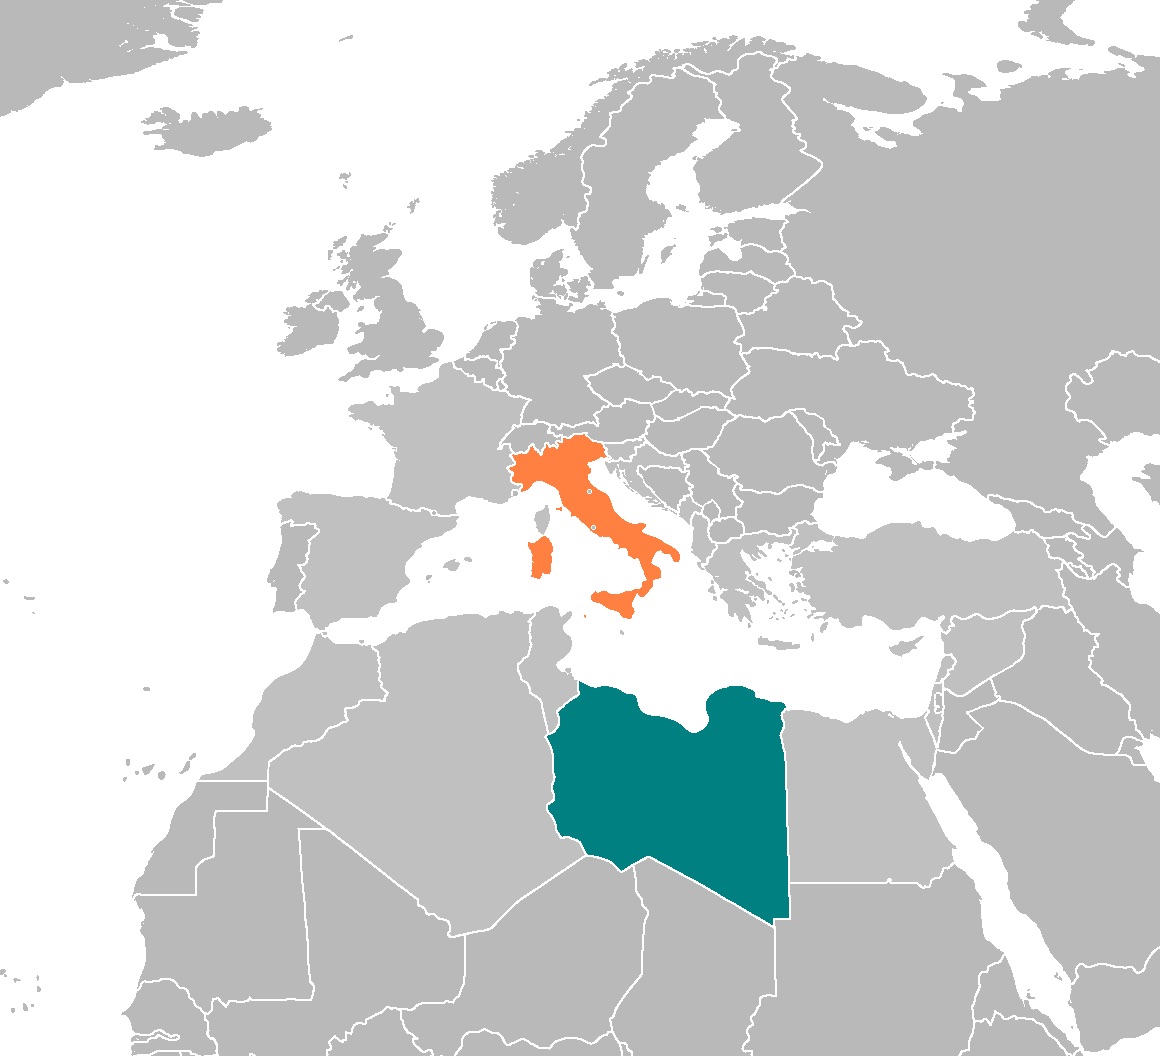 Italy and Libya. Photo Source: Wikimedia Commons 